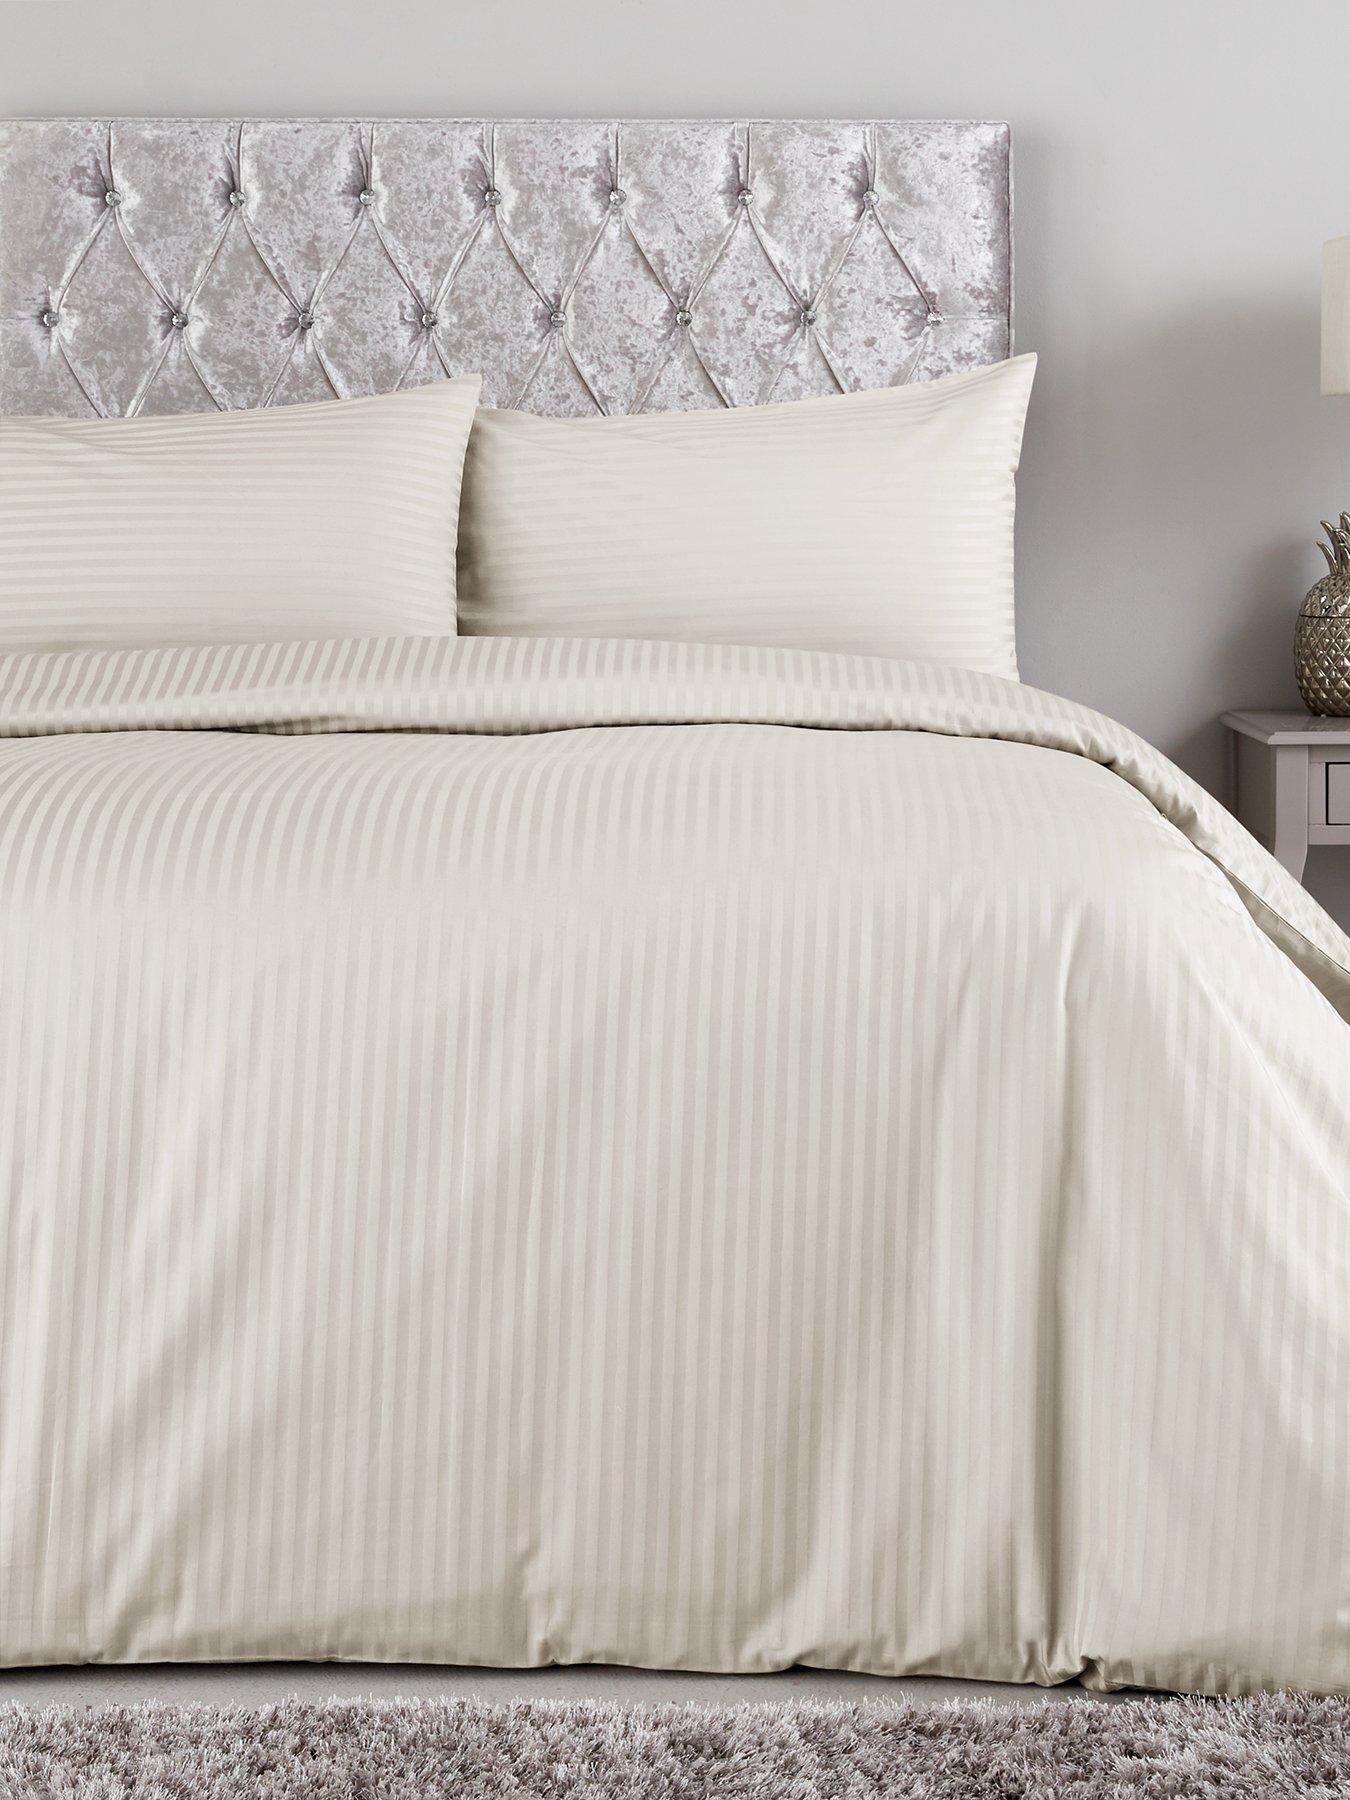 Latest Offers White Bedroom Duvet Covers Bedding Home